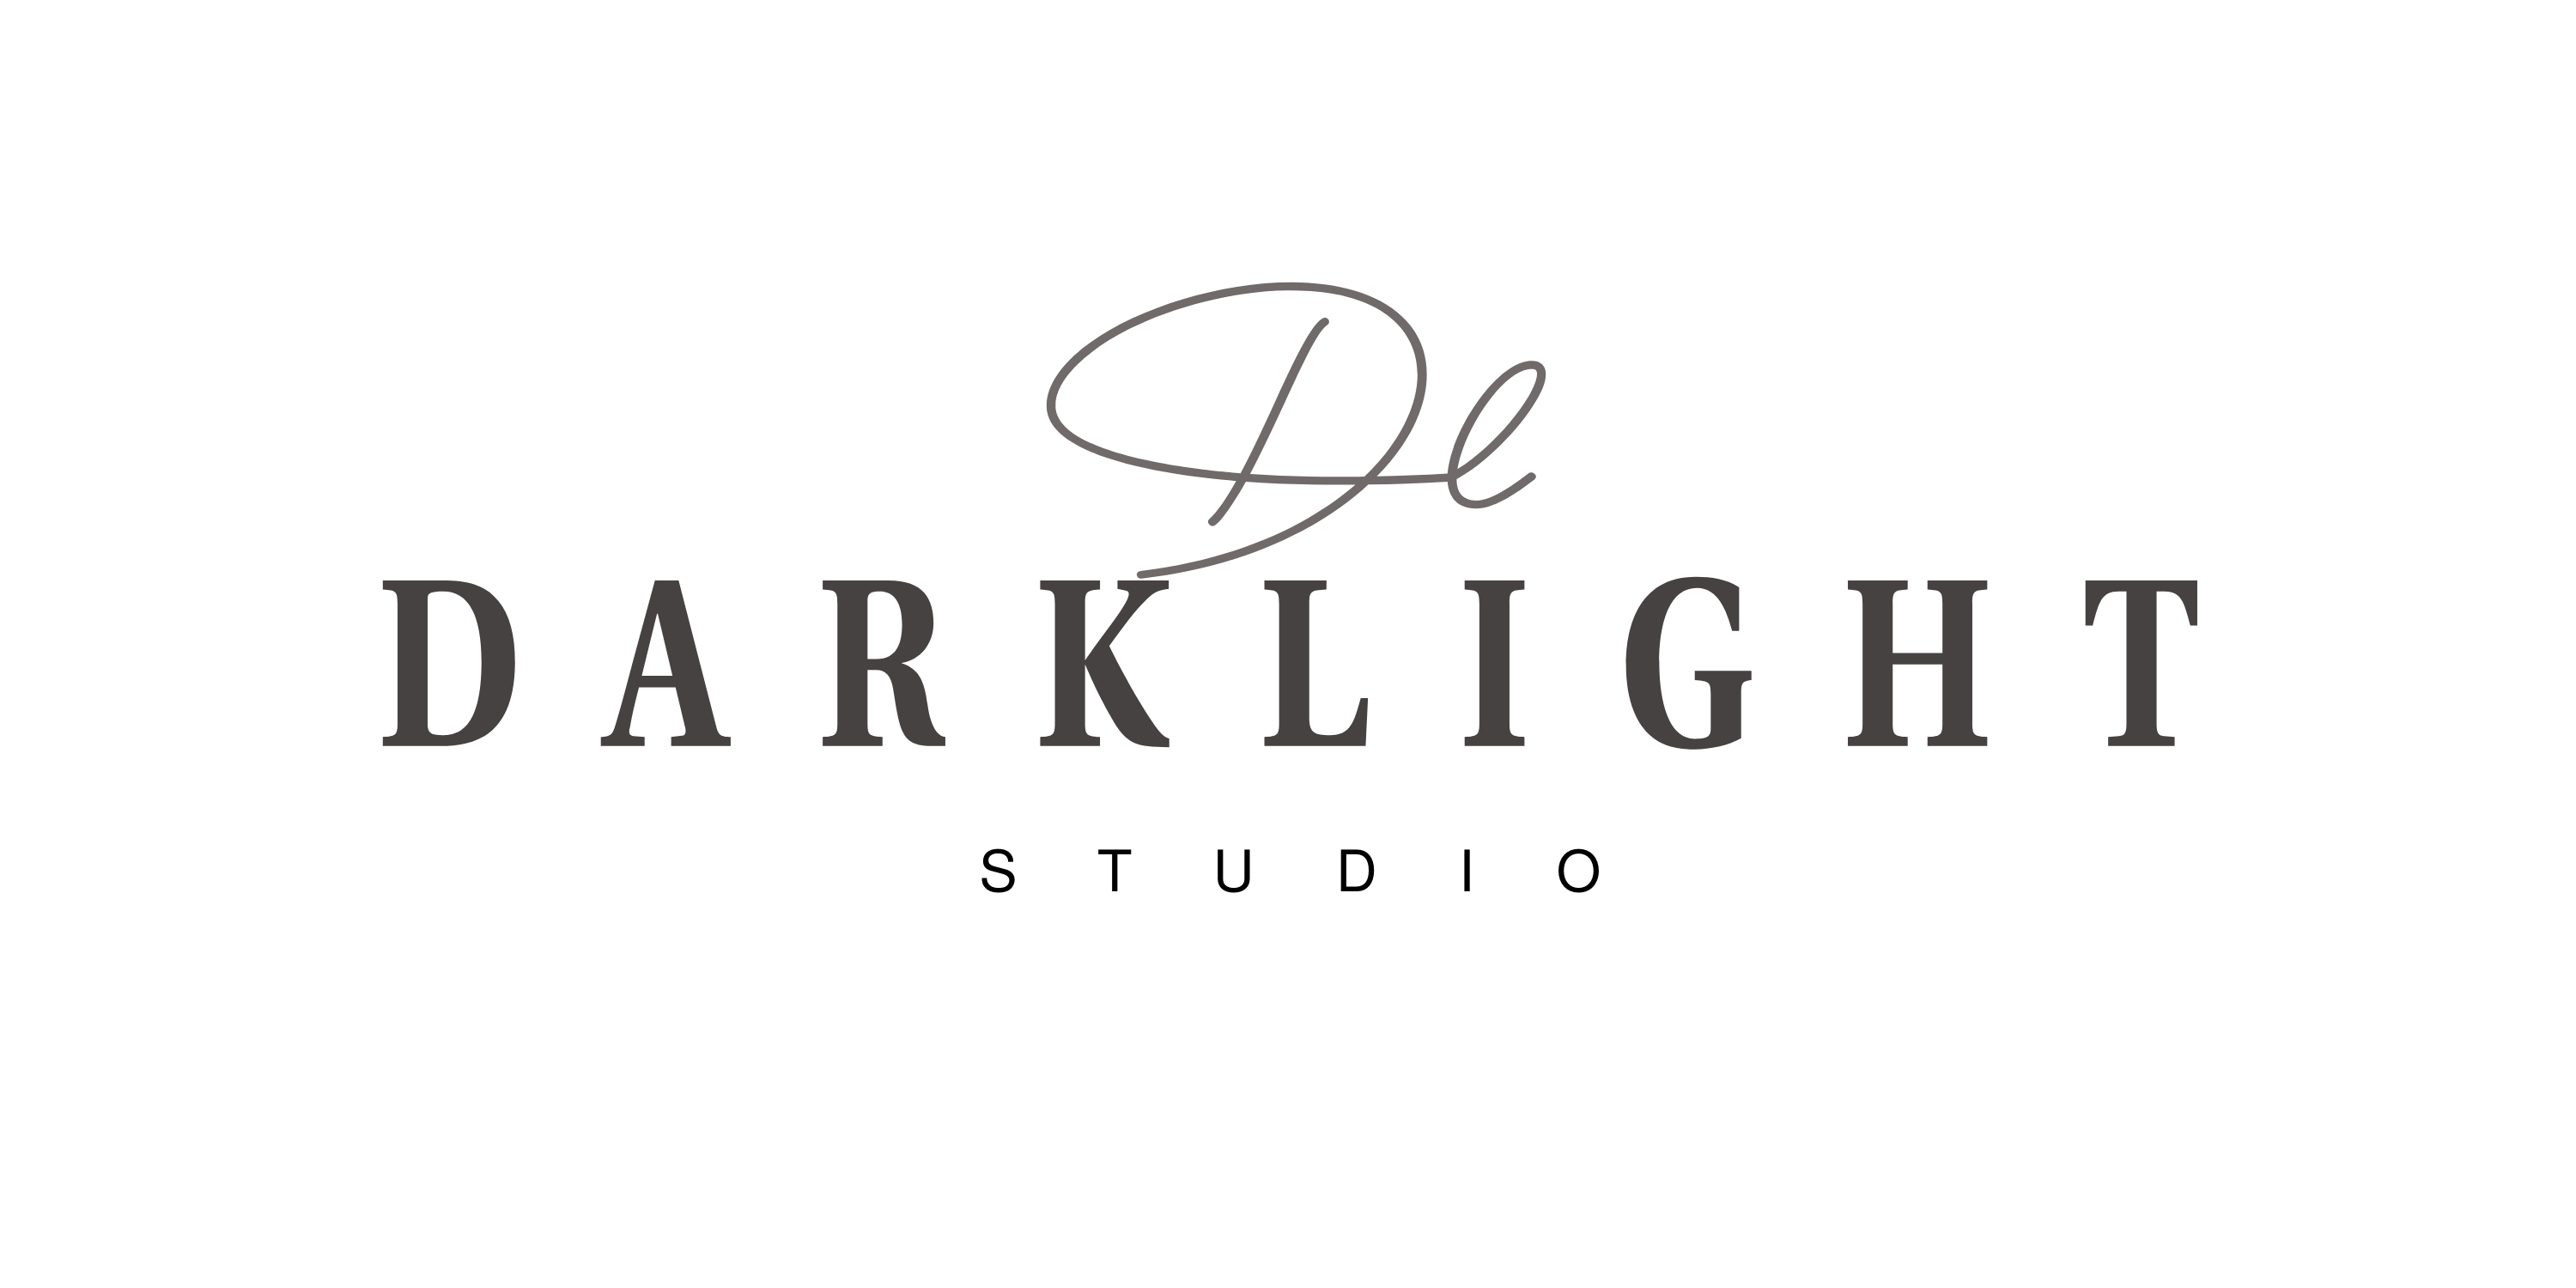 Darklight Studio